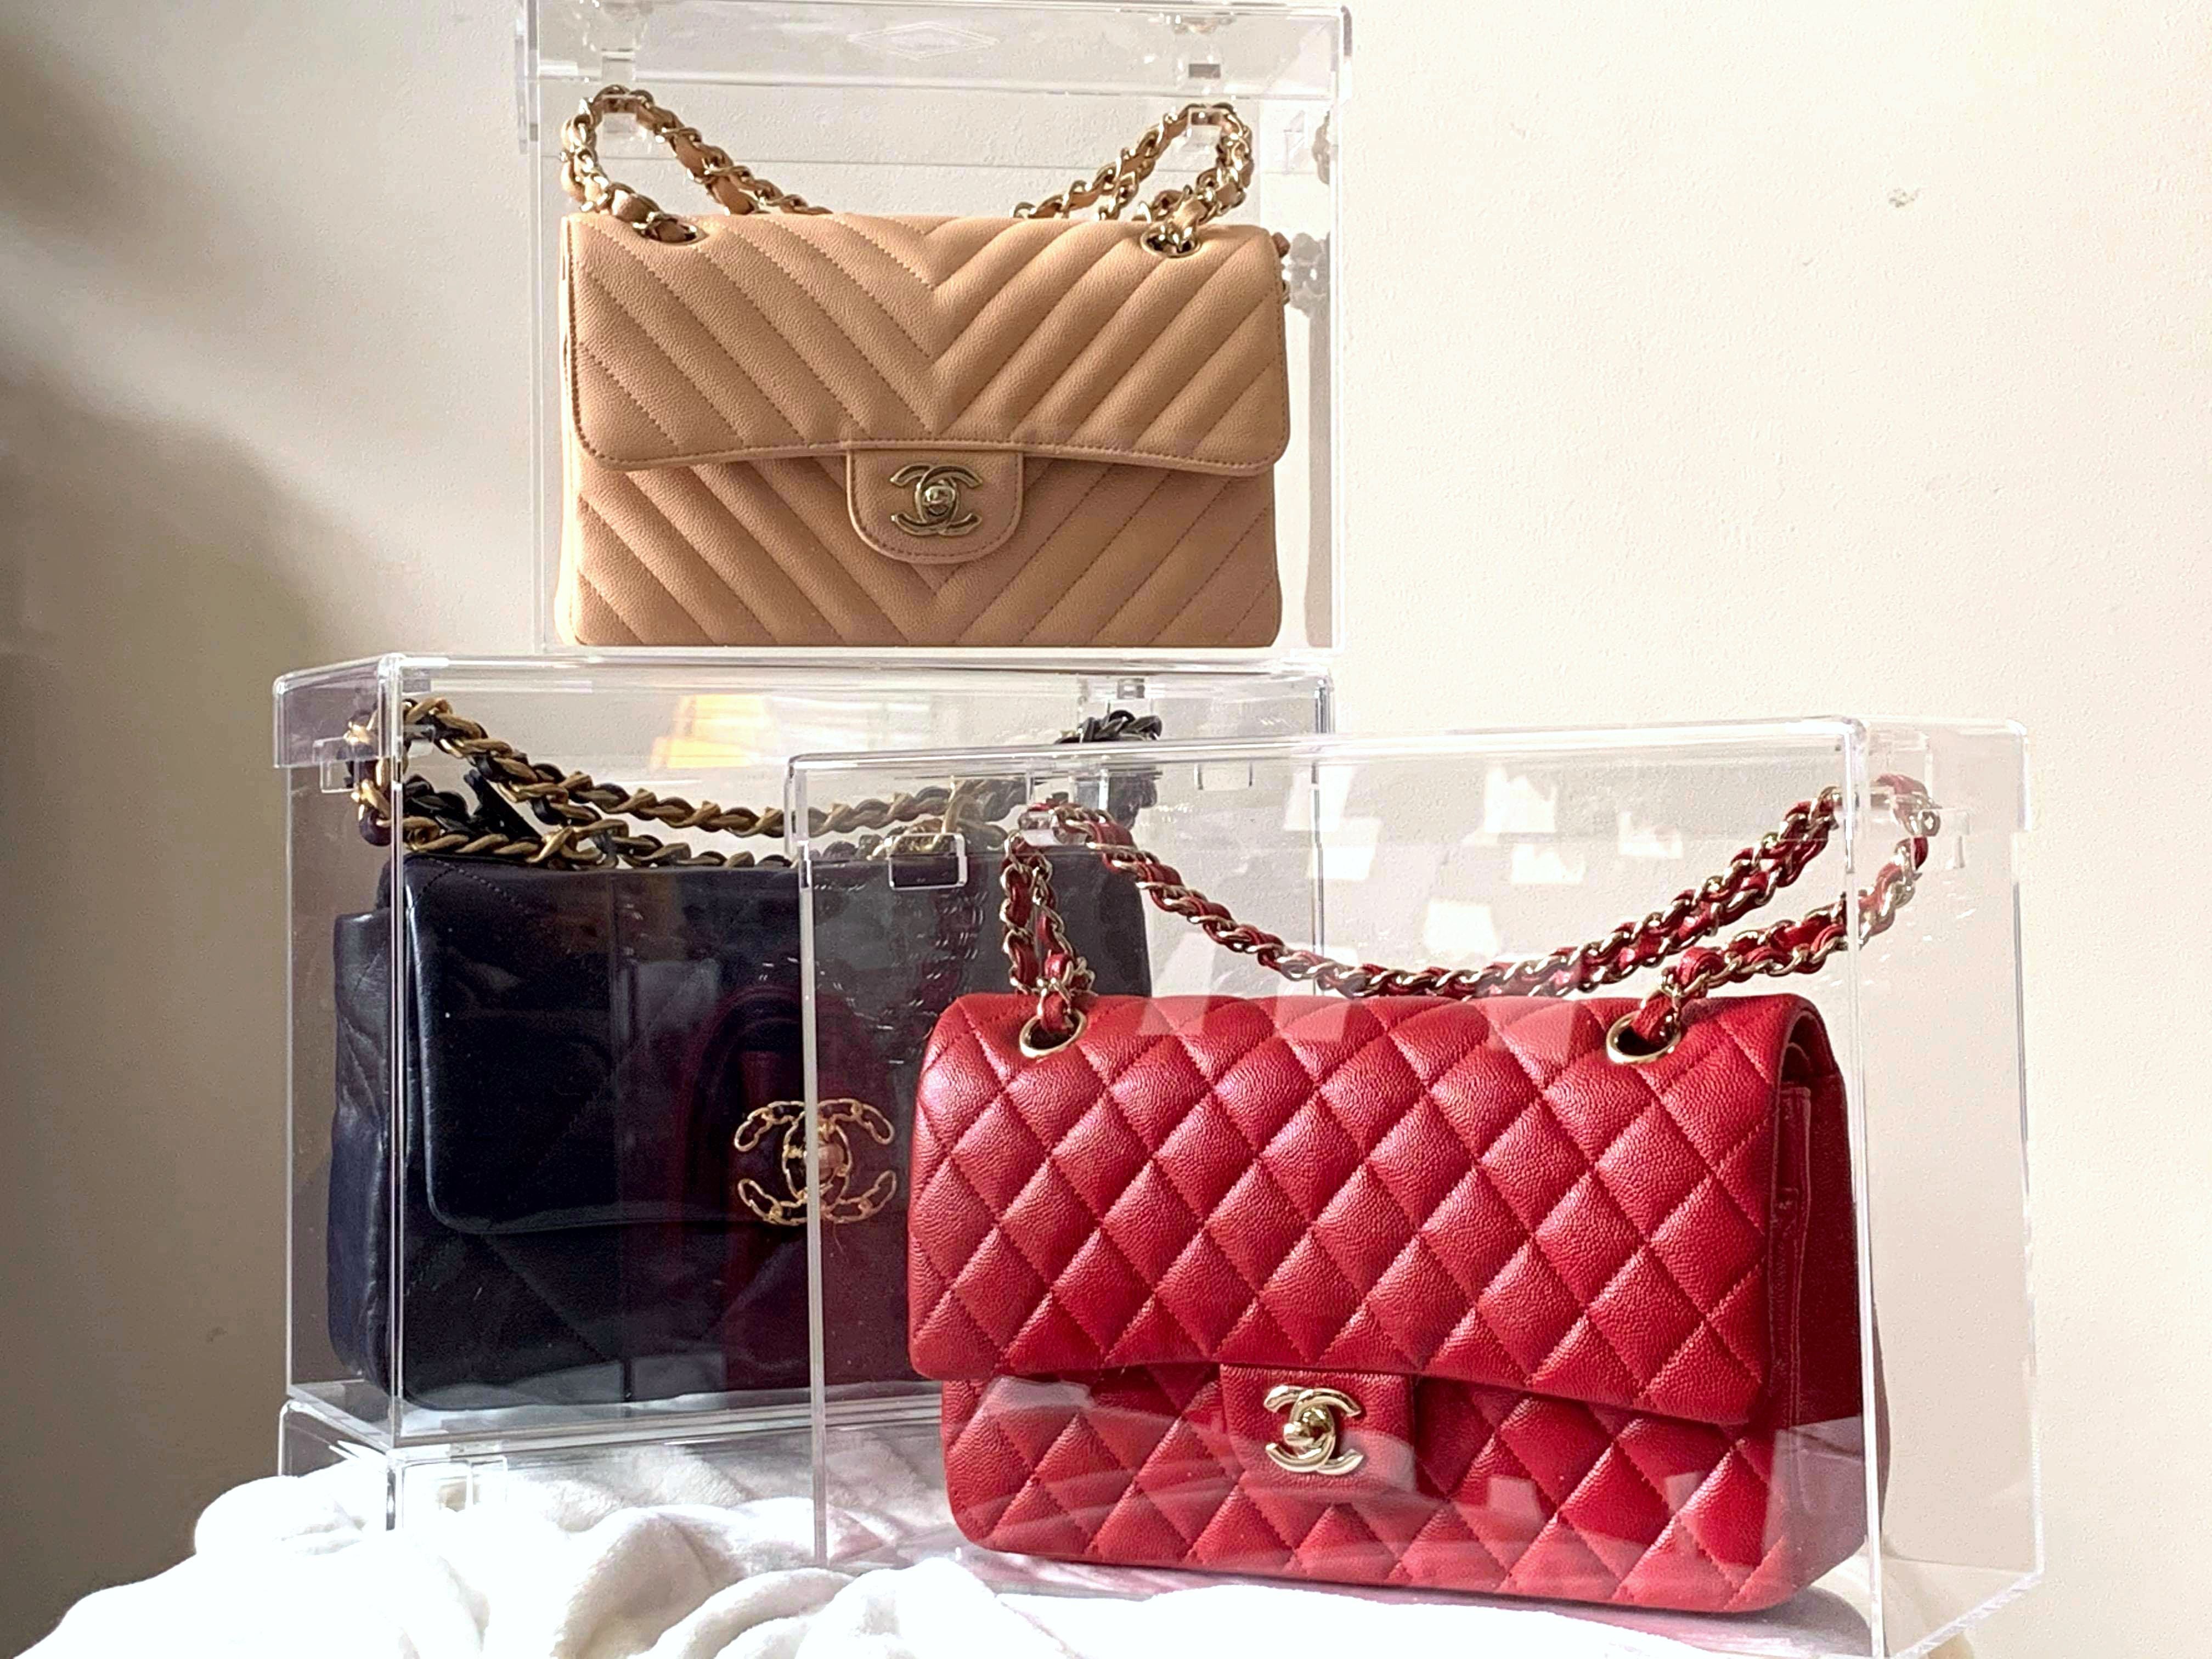 W2C] Chanel bag in pic : r/DesignerReps